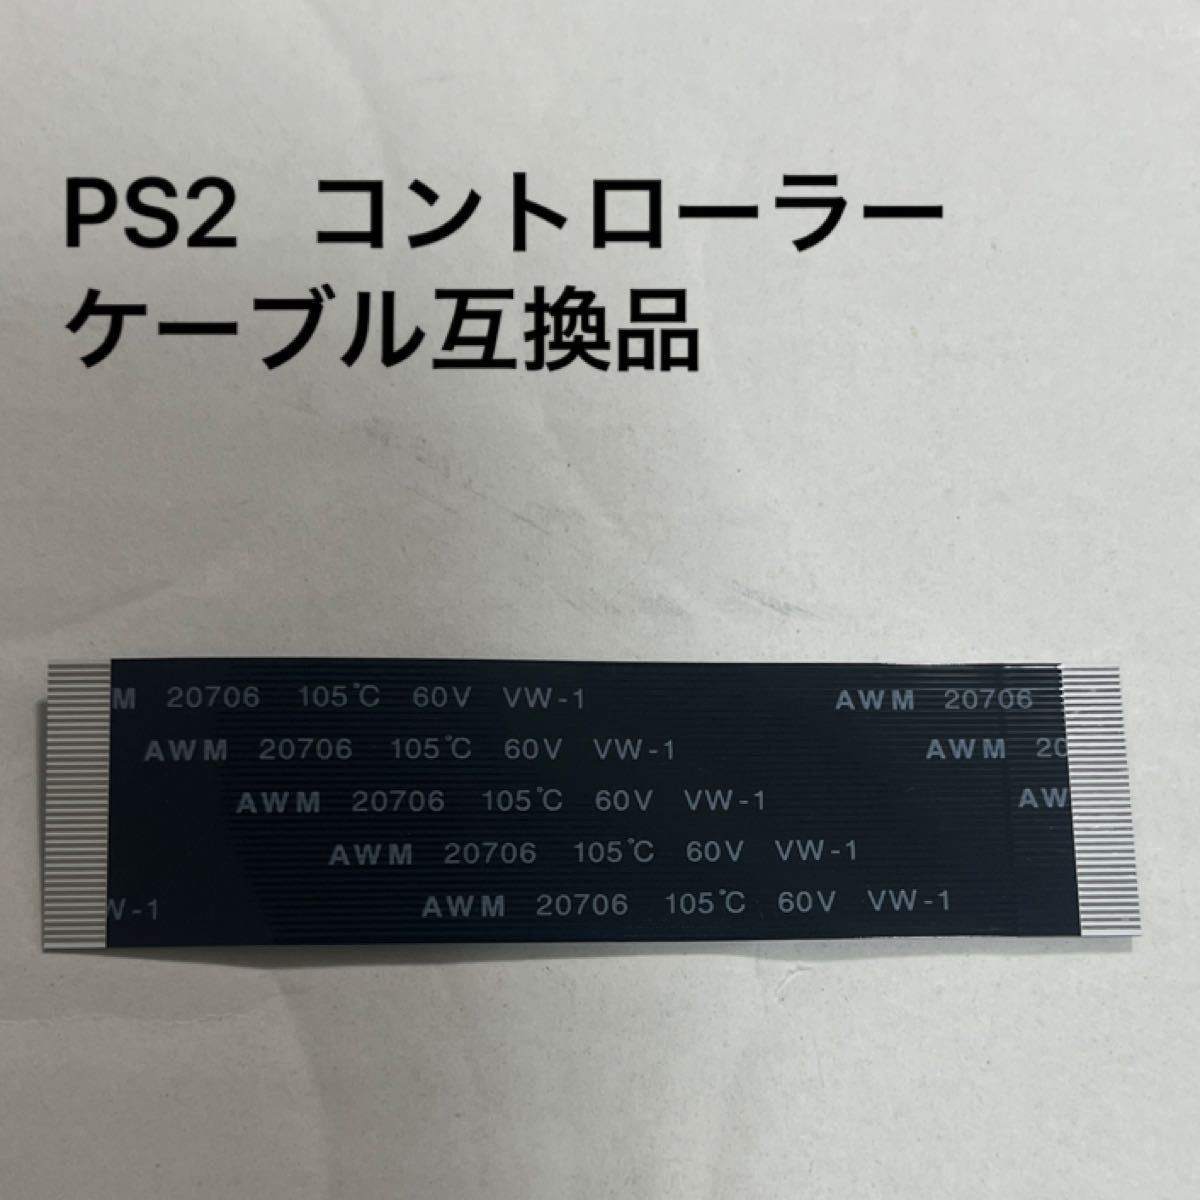 PS2 3xxxx~5xxxxシリーズ対応 フラットケーブル 互換品